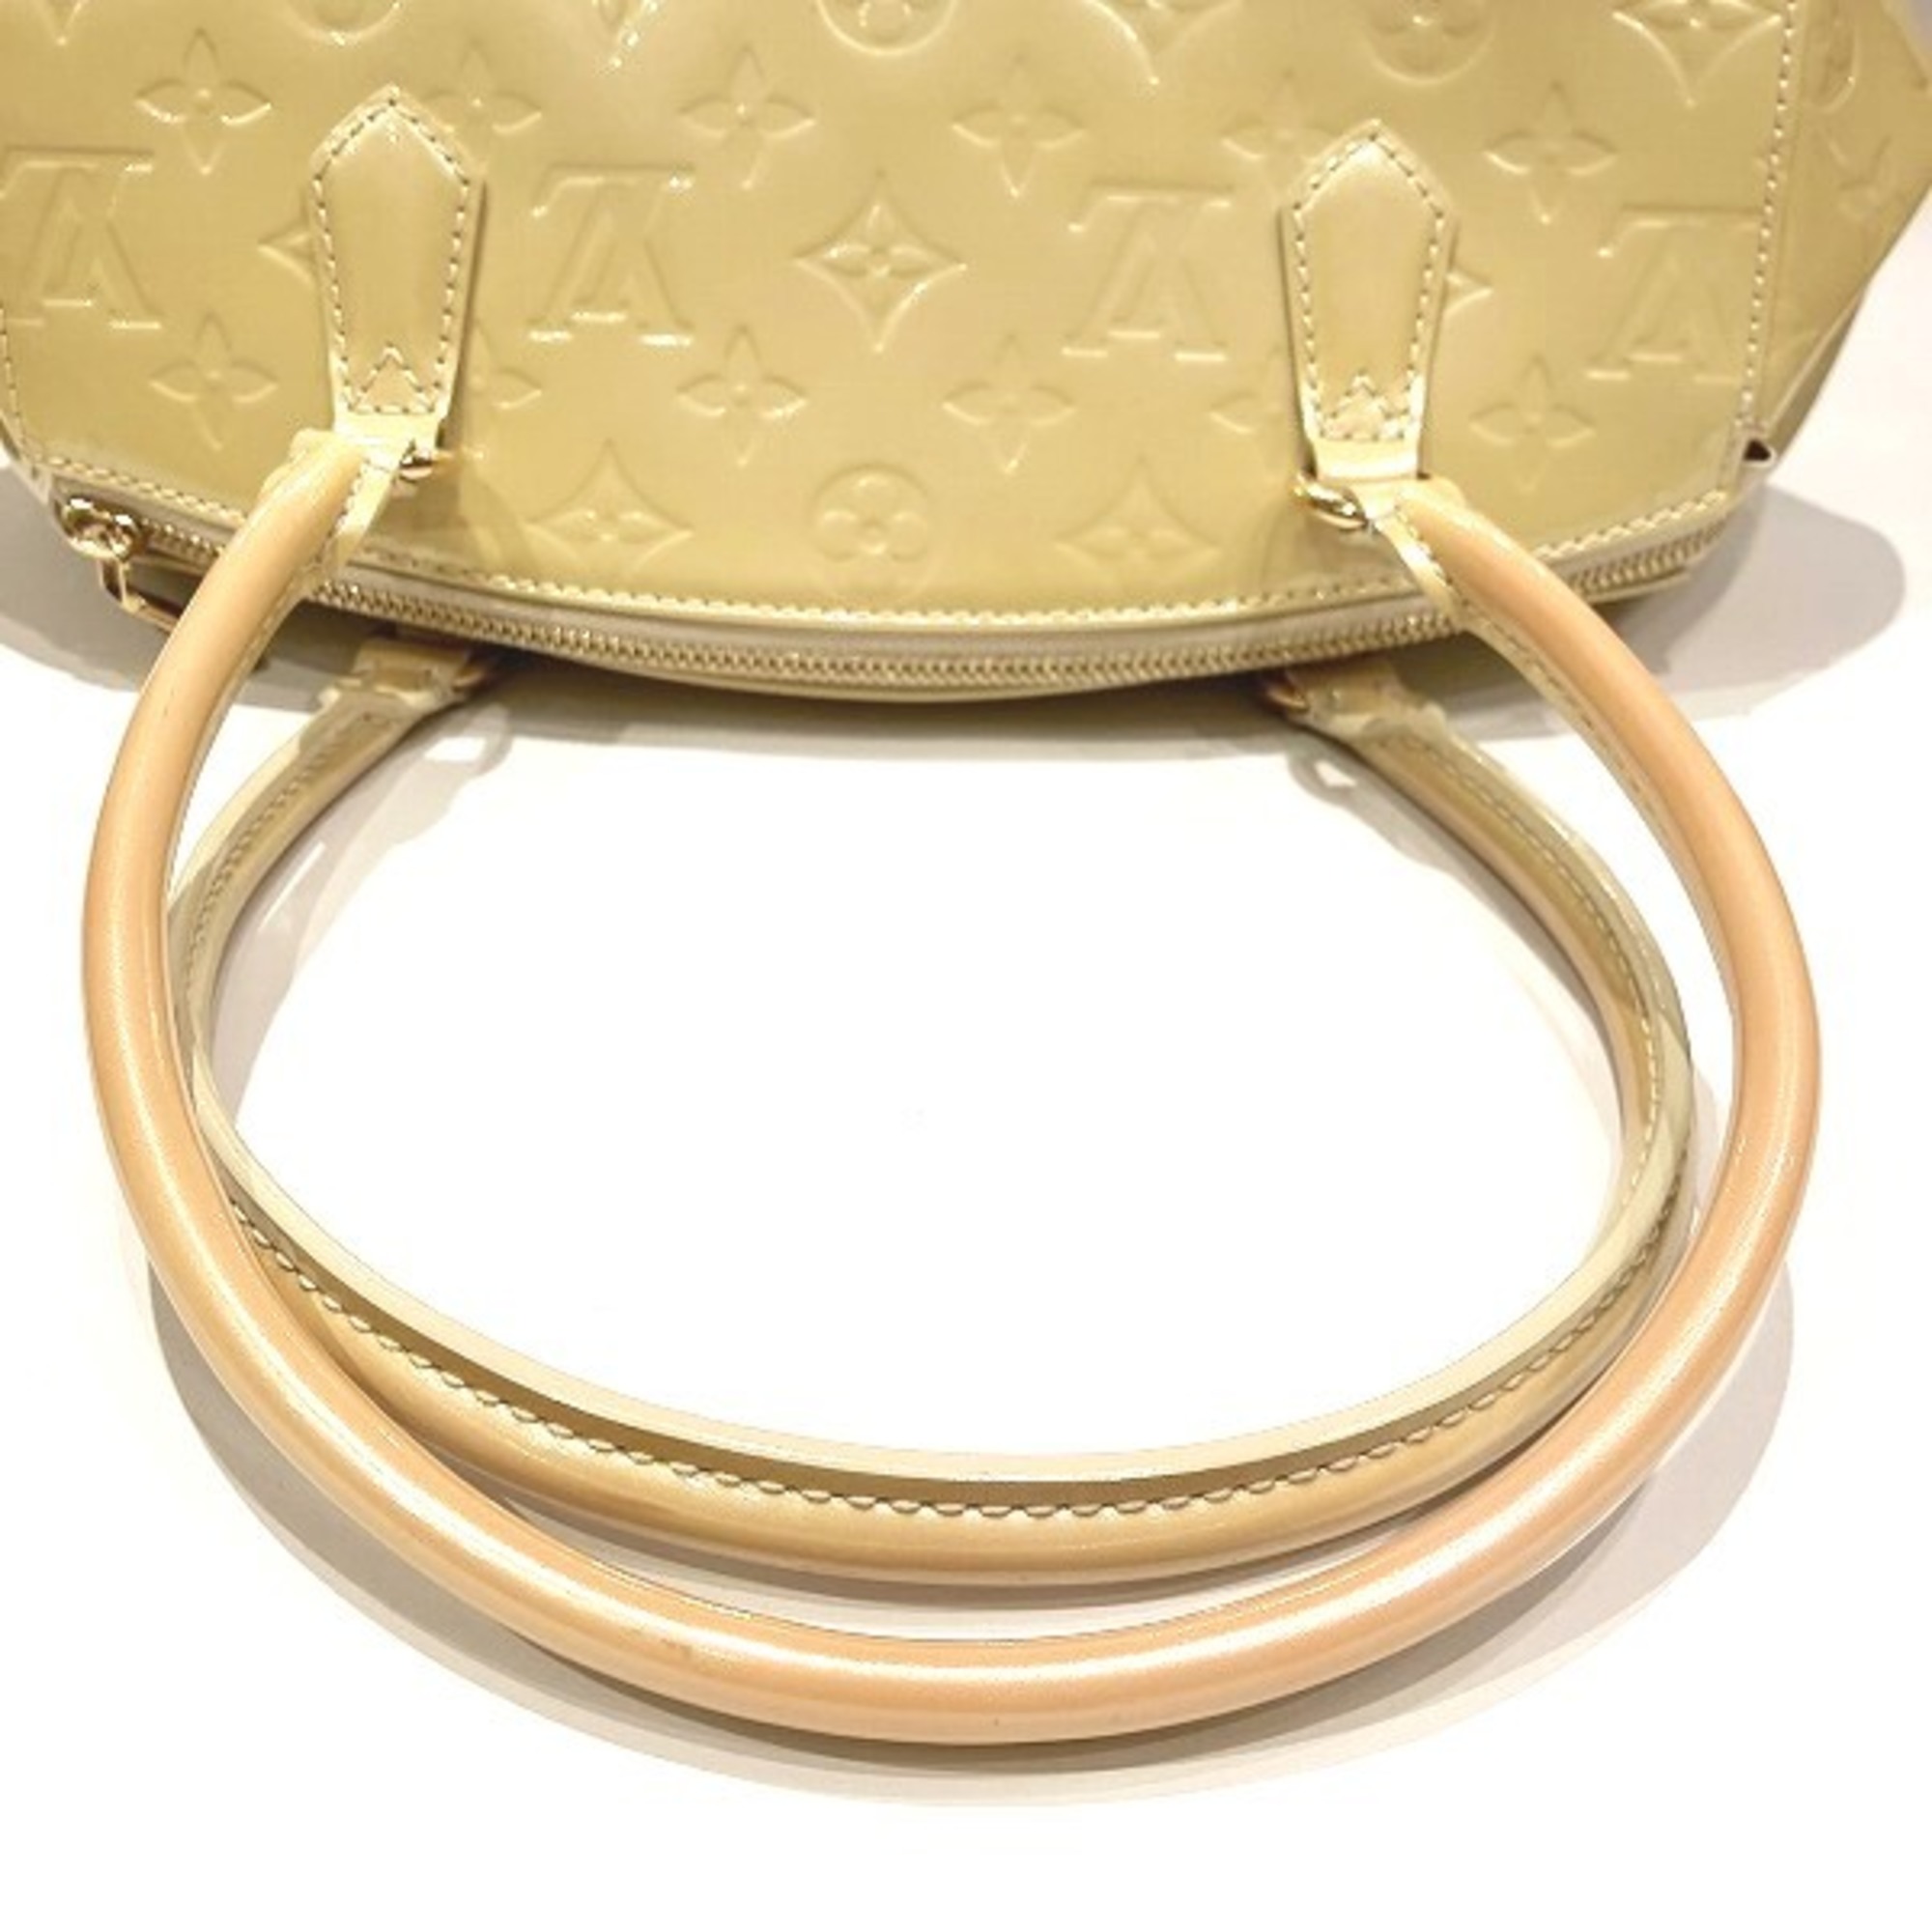 Louis Vuitton Vernis Sherwood PM M91491 Bags Handbags Women's